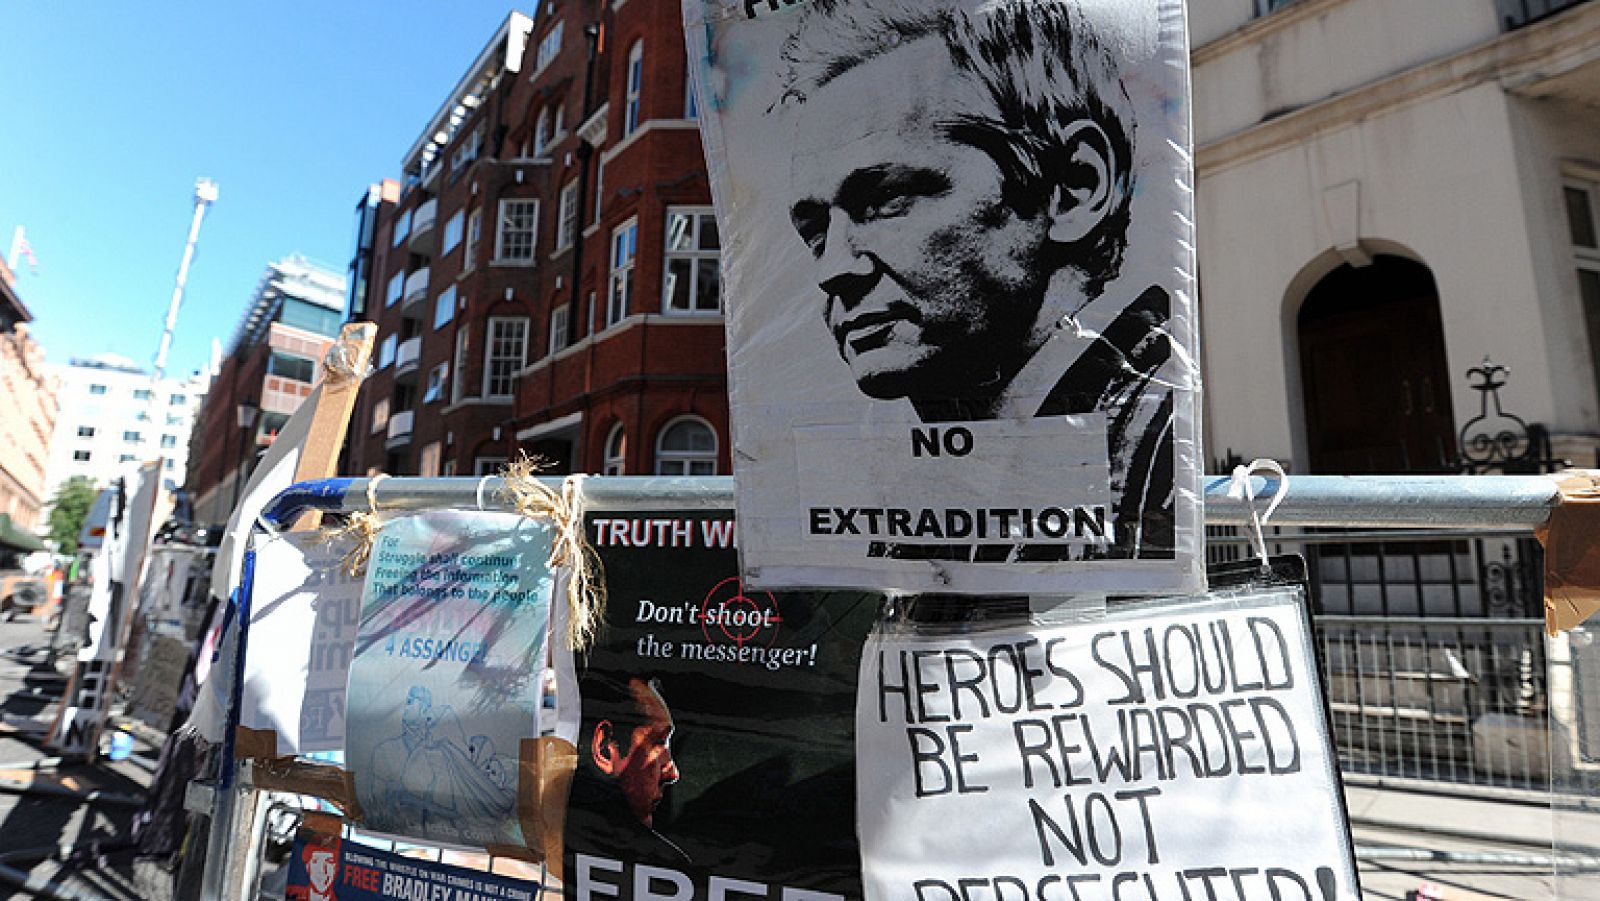  nducto a Julian Assange para abandonar su embajada en Londres